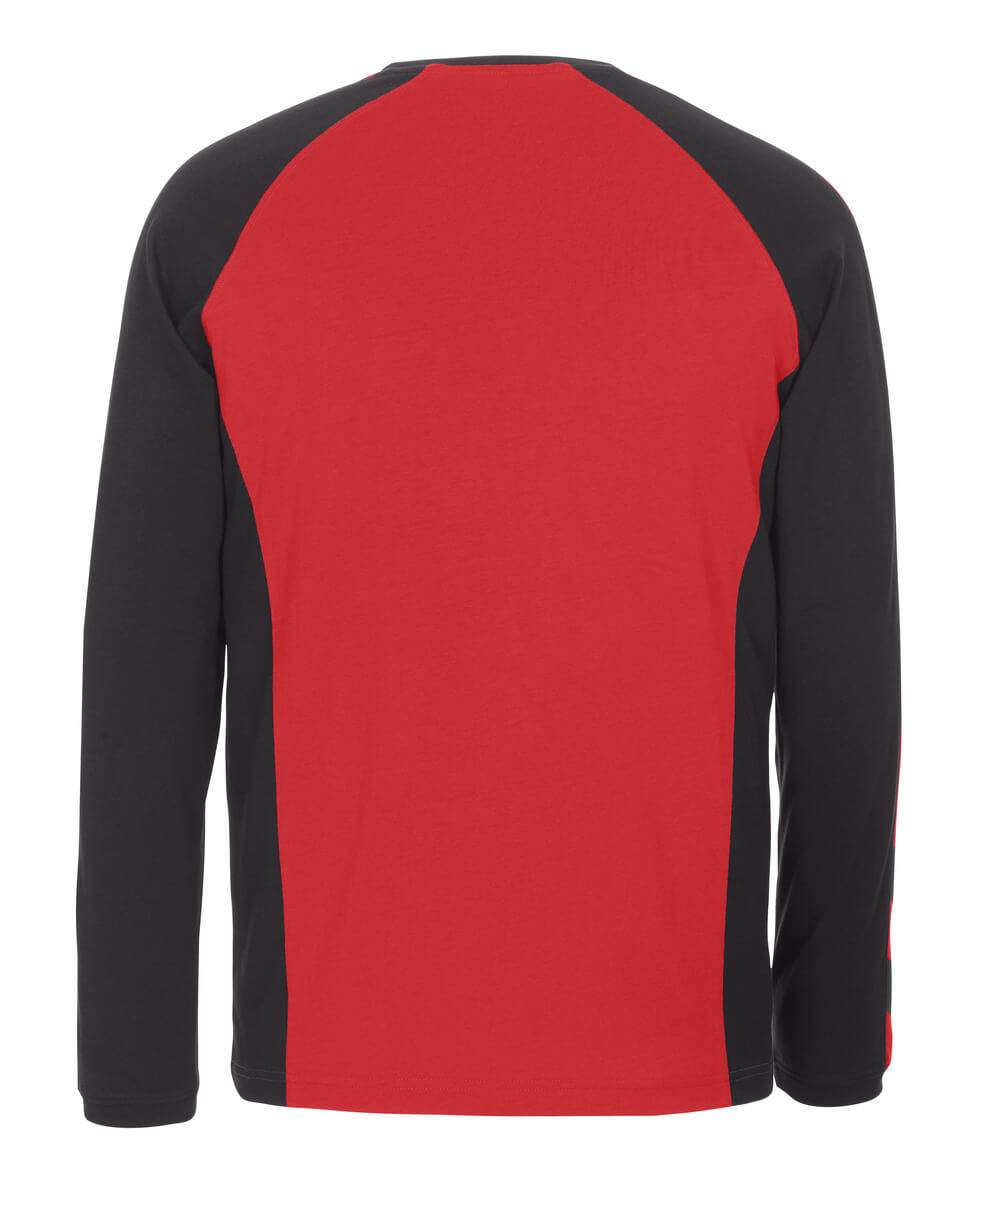 Mascot UNIQUE  Bielefeld T-shirt, long-sleeved 50568 red/black